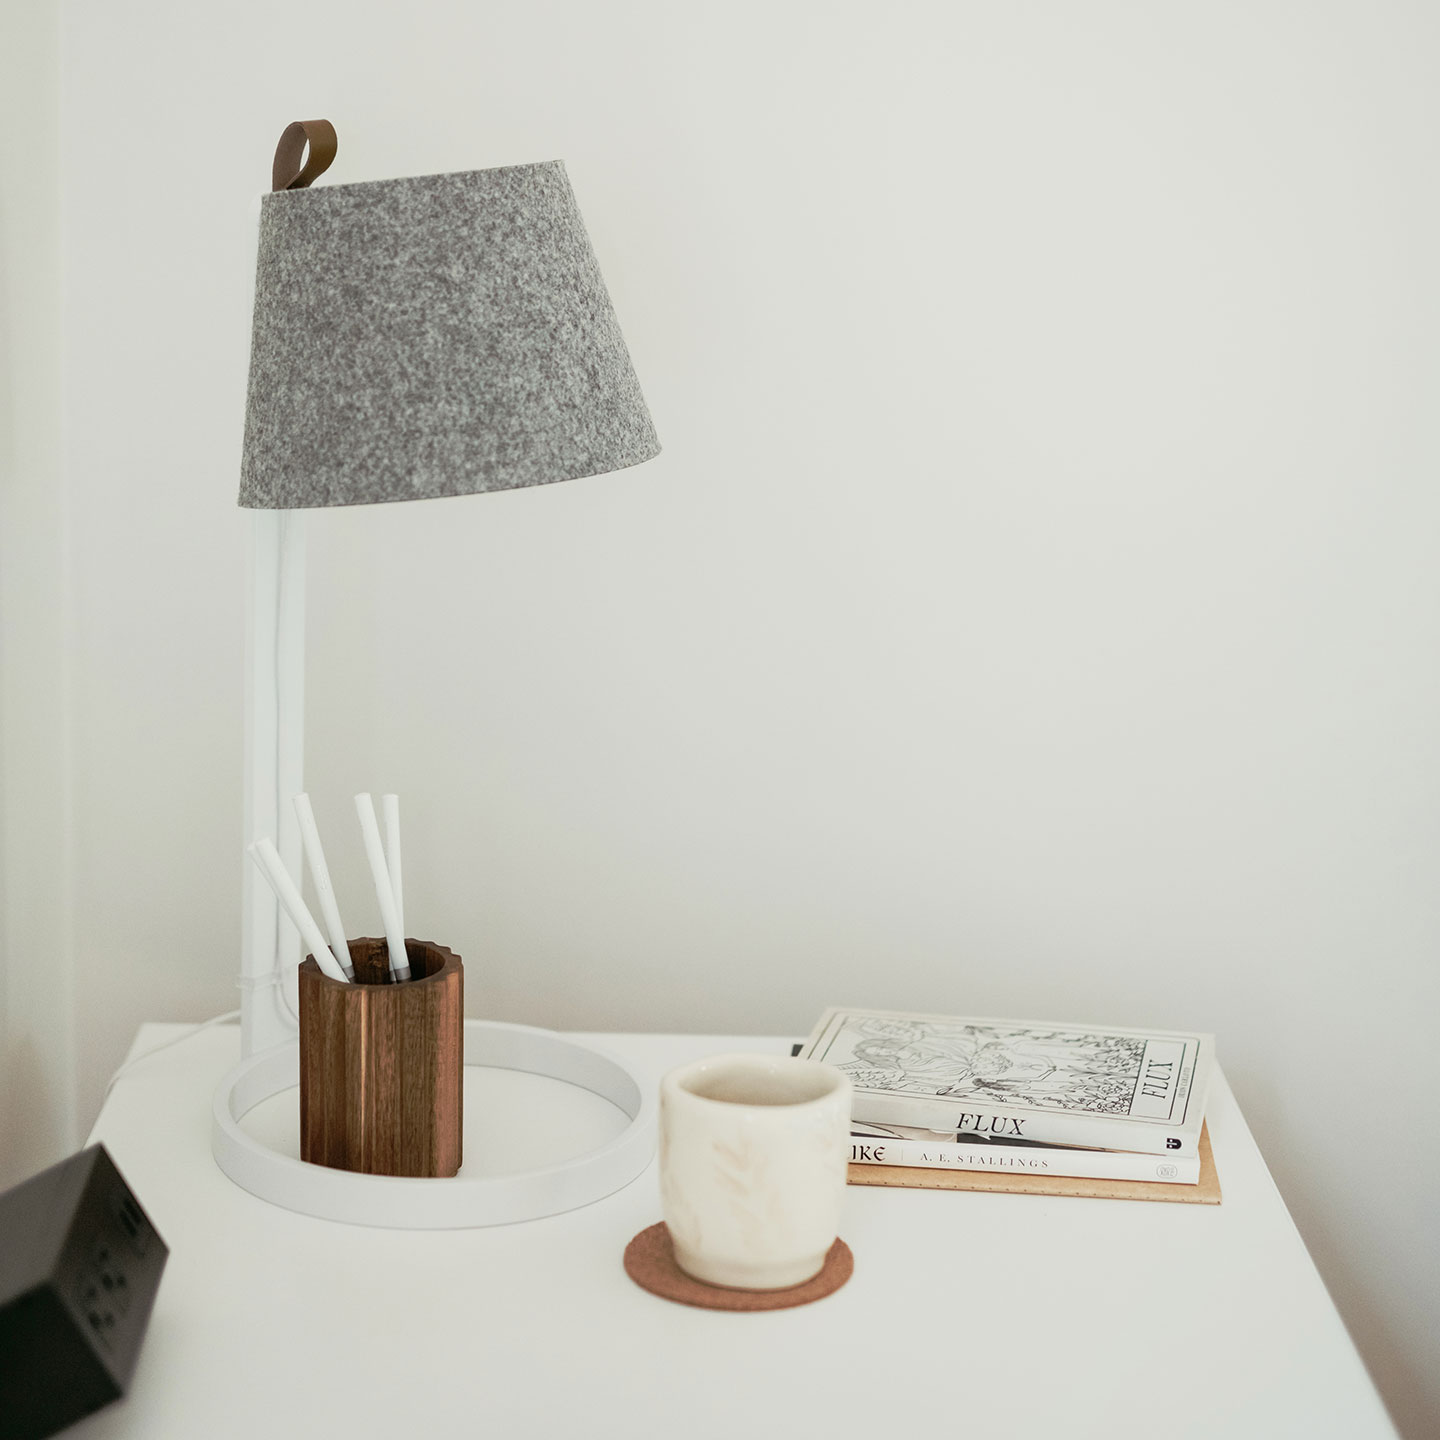 Haworth Lana Lighting grey desk lamp on white table